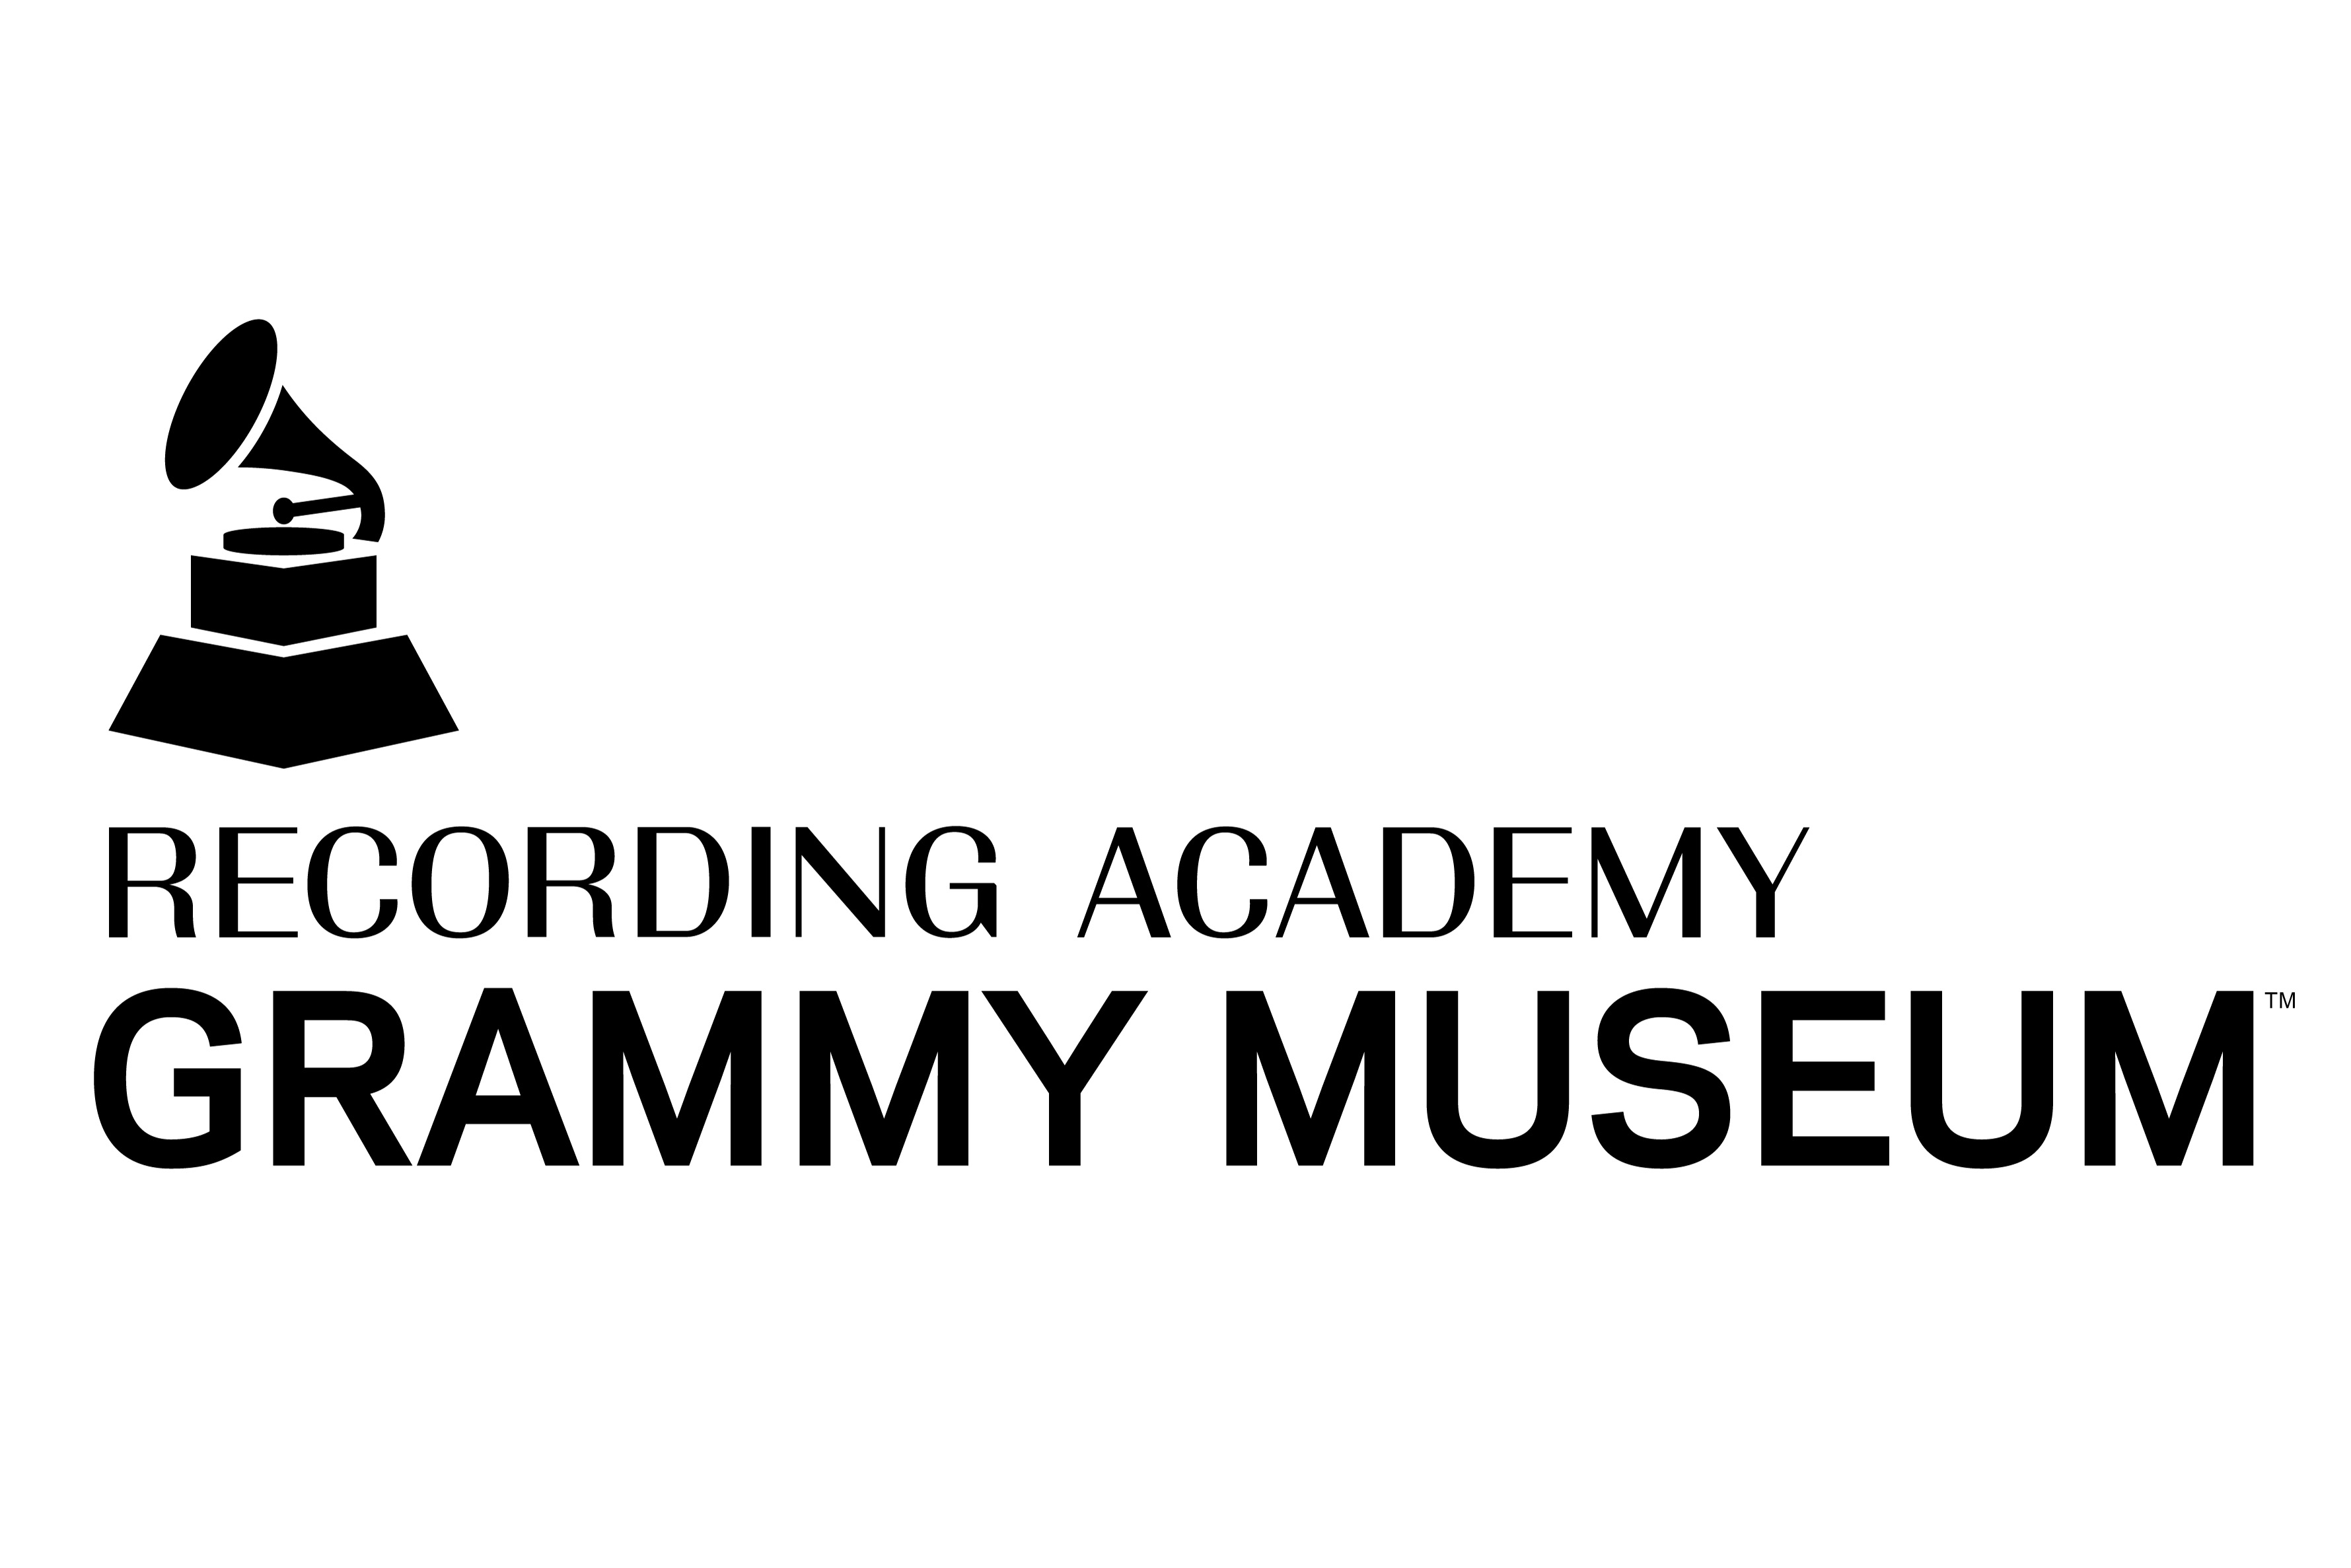 GRAMMY Museum Grant